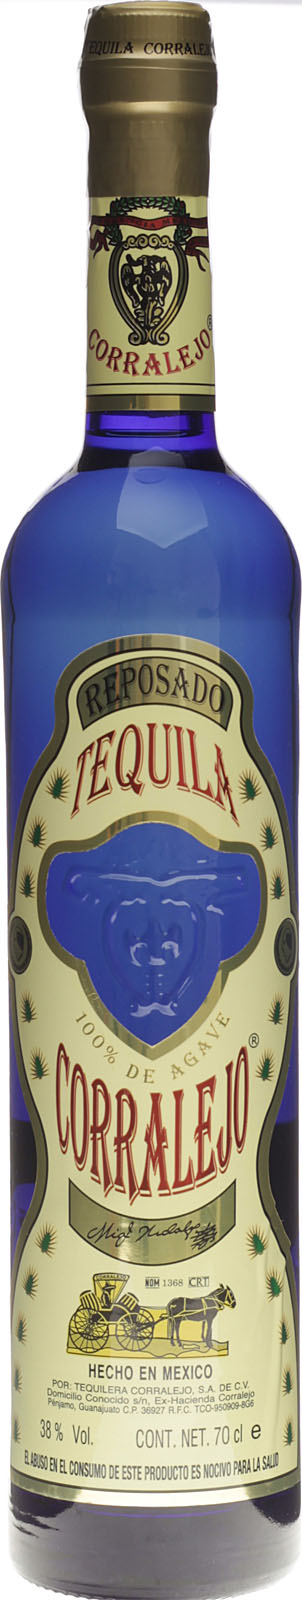 kaufen im hier Onlineshop Reposado Tequila Corralejo